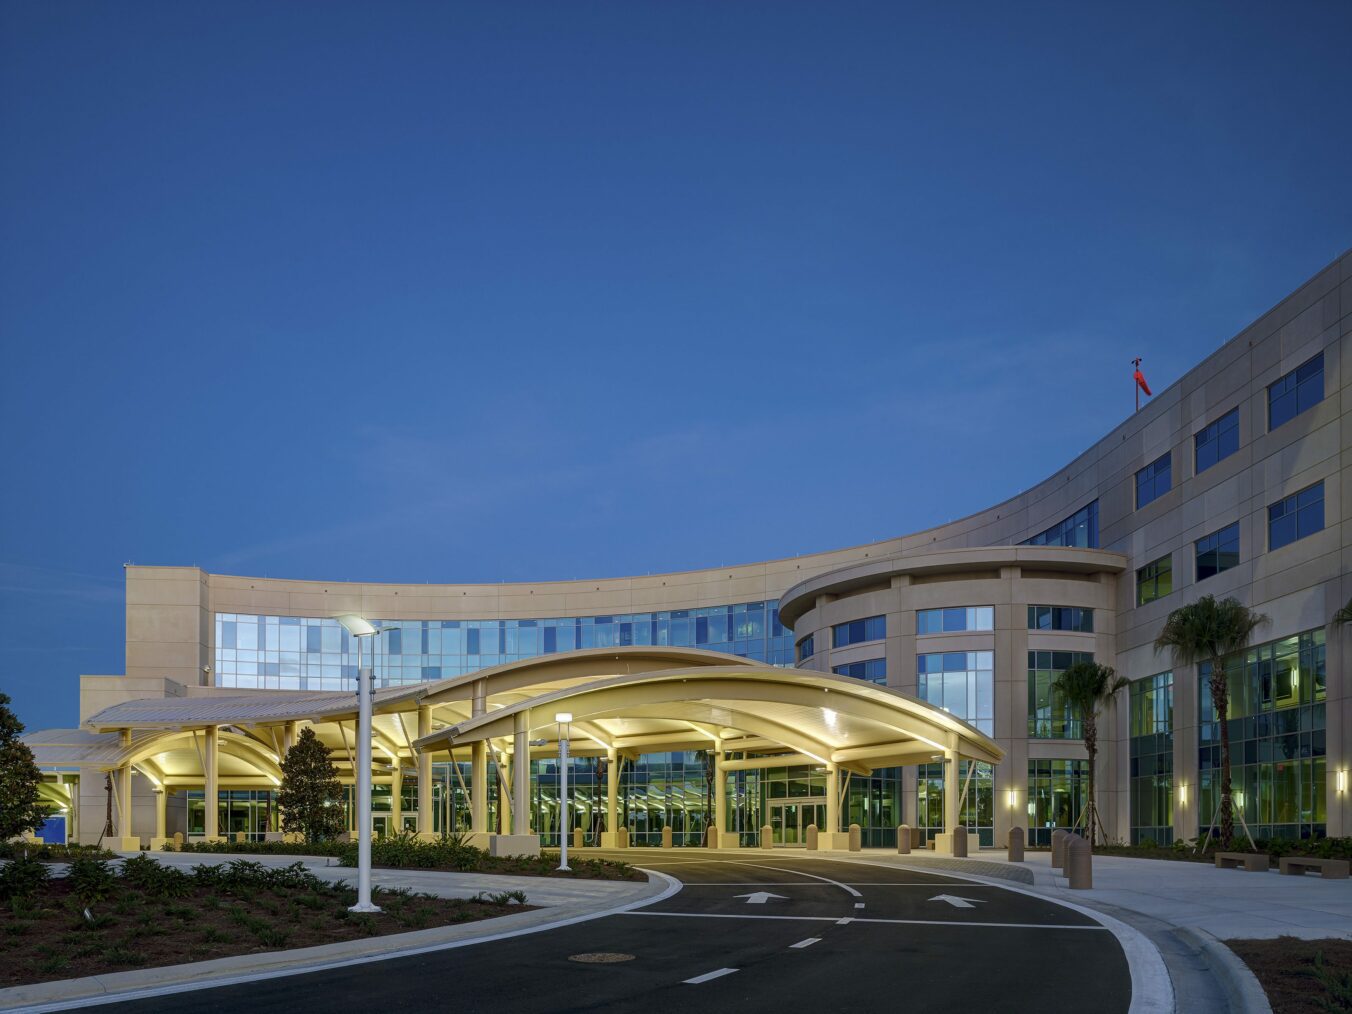 Exterior view of hospital's main entrance at night